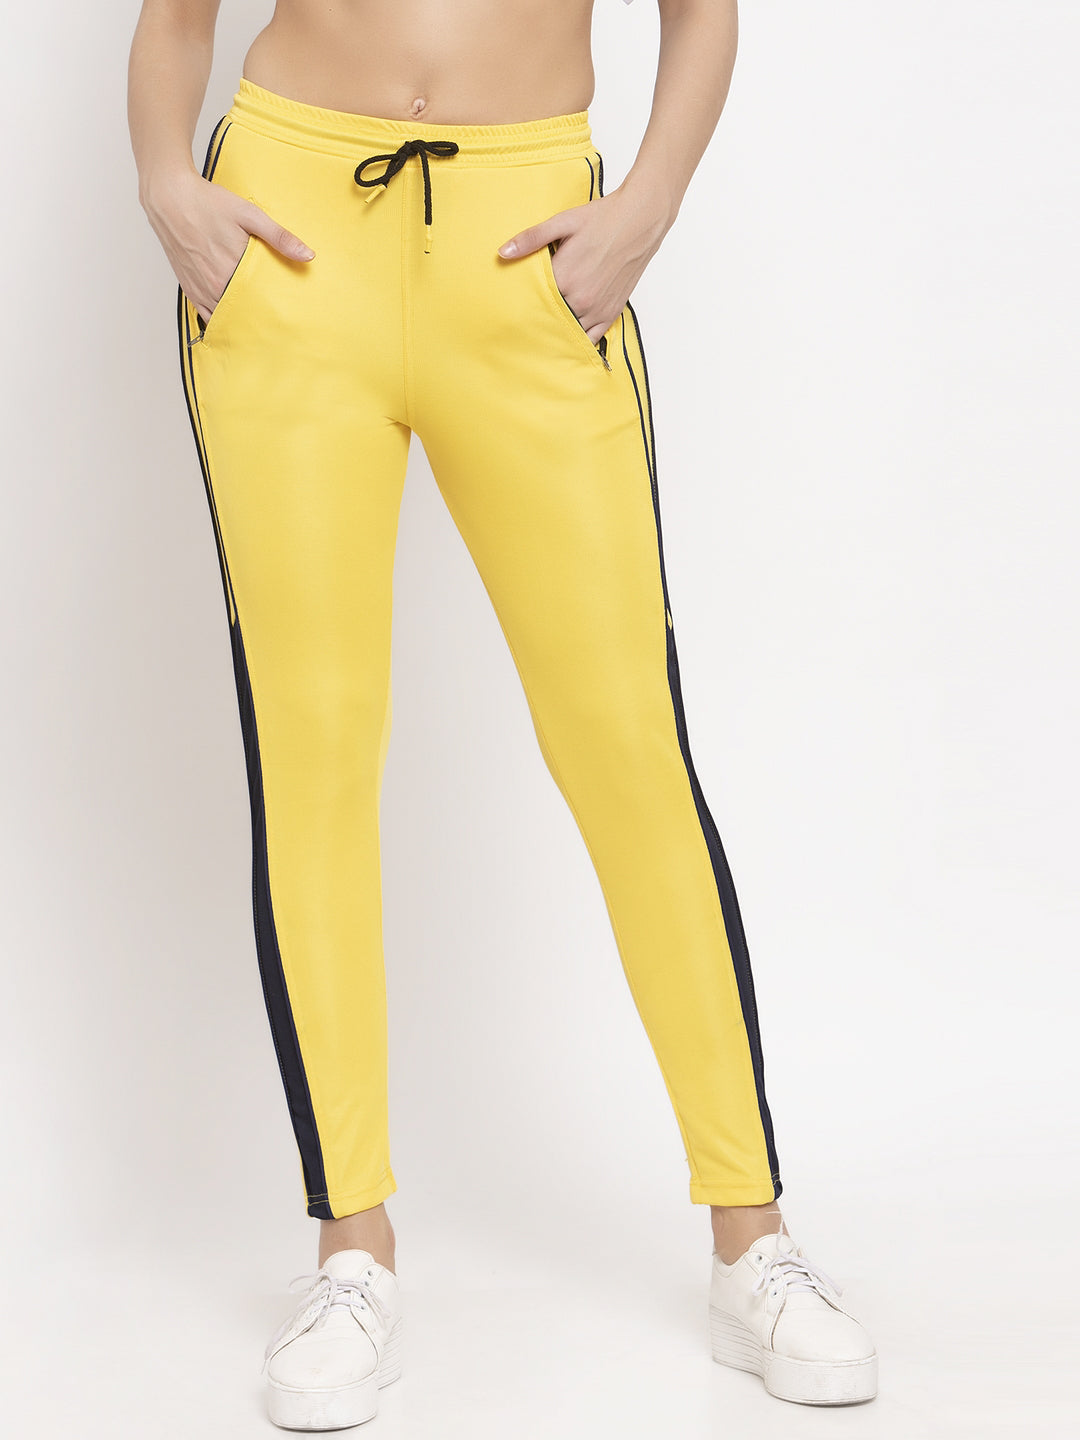 KLOTTHE Women Yellow Casual Track pants